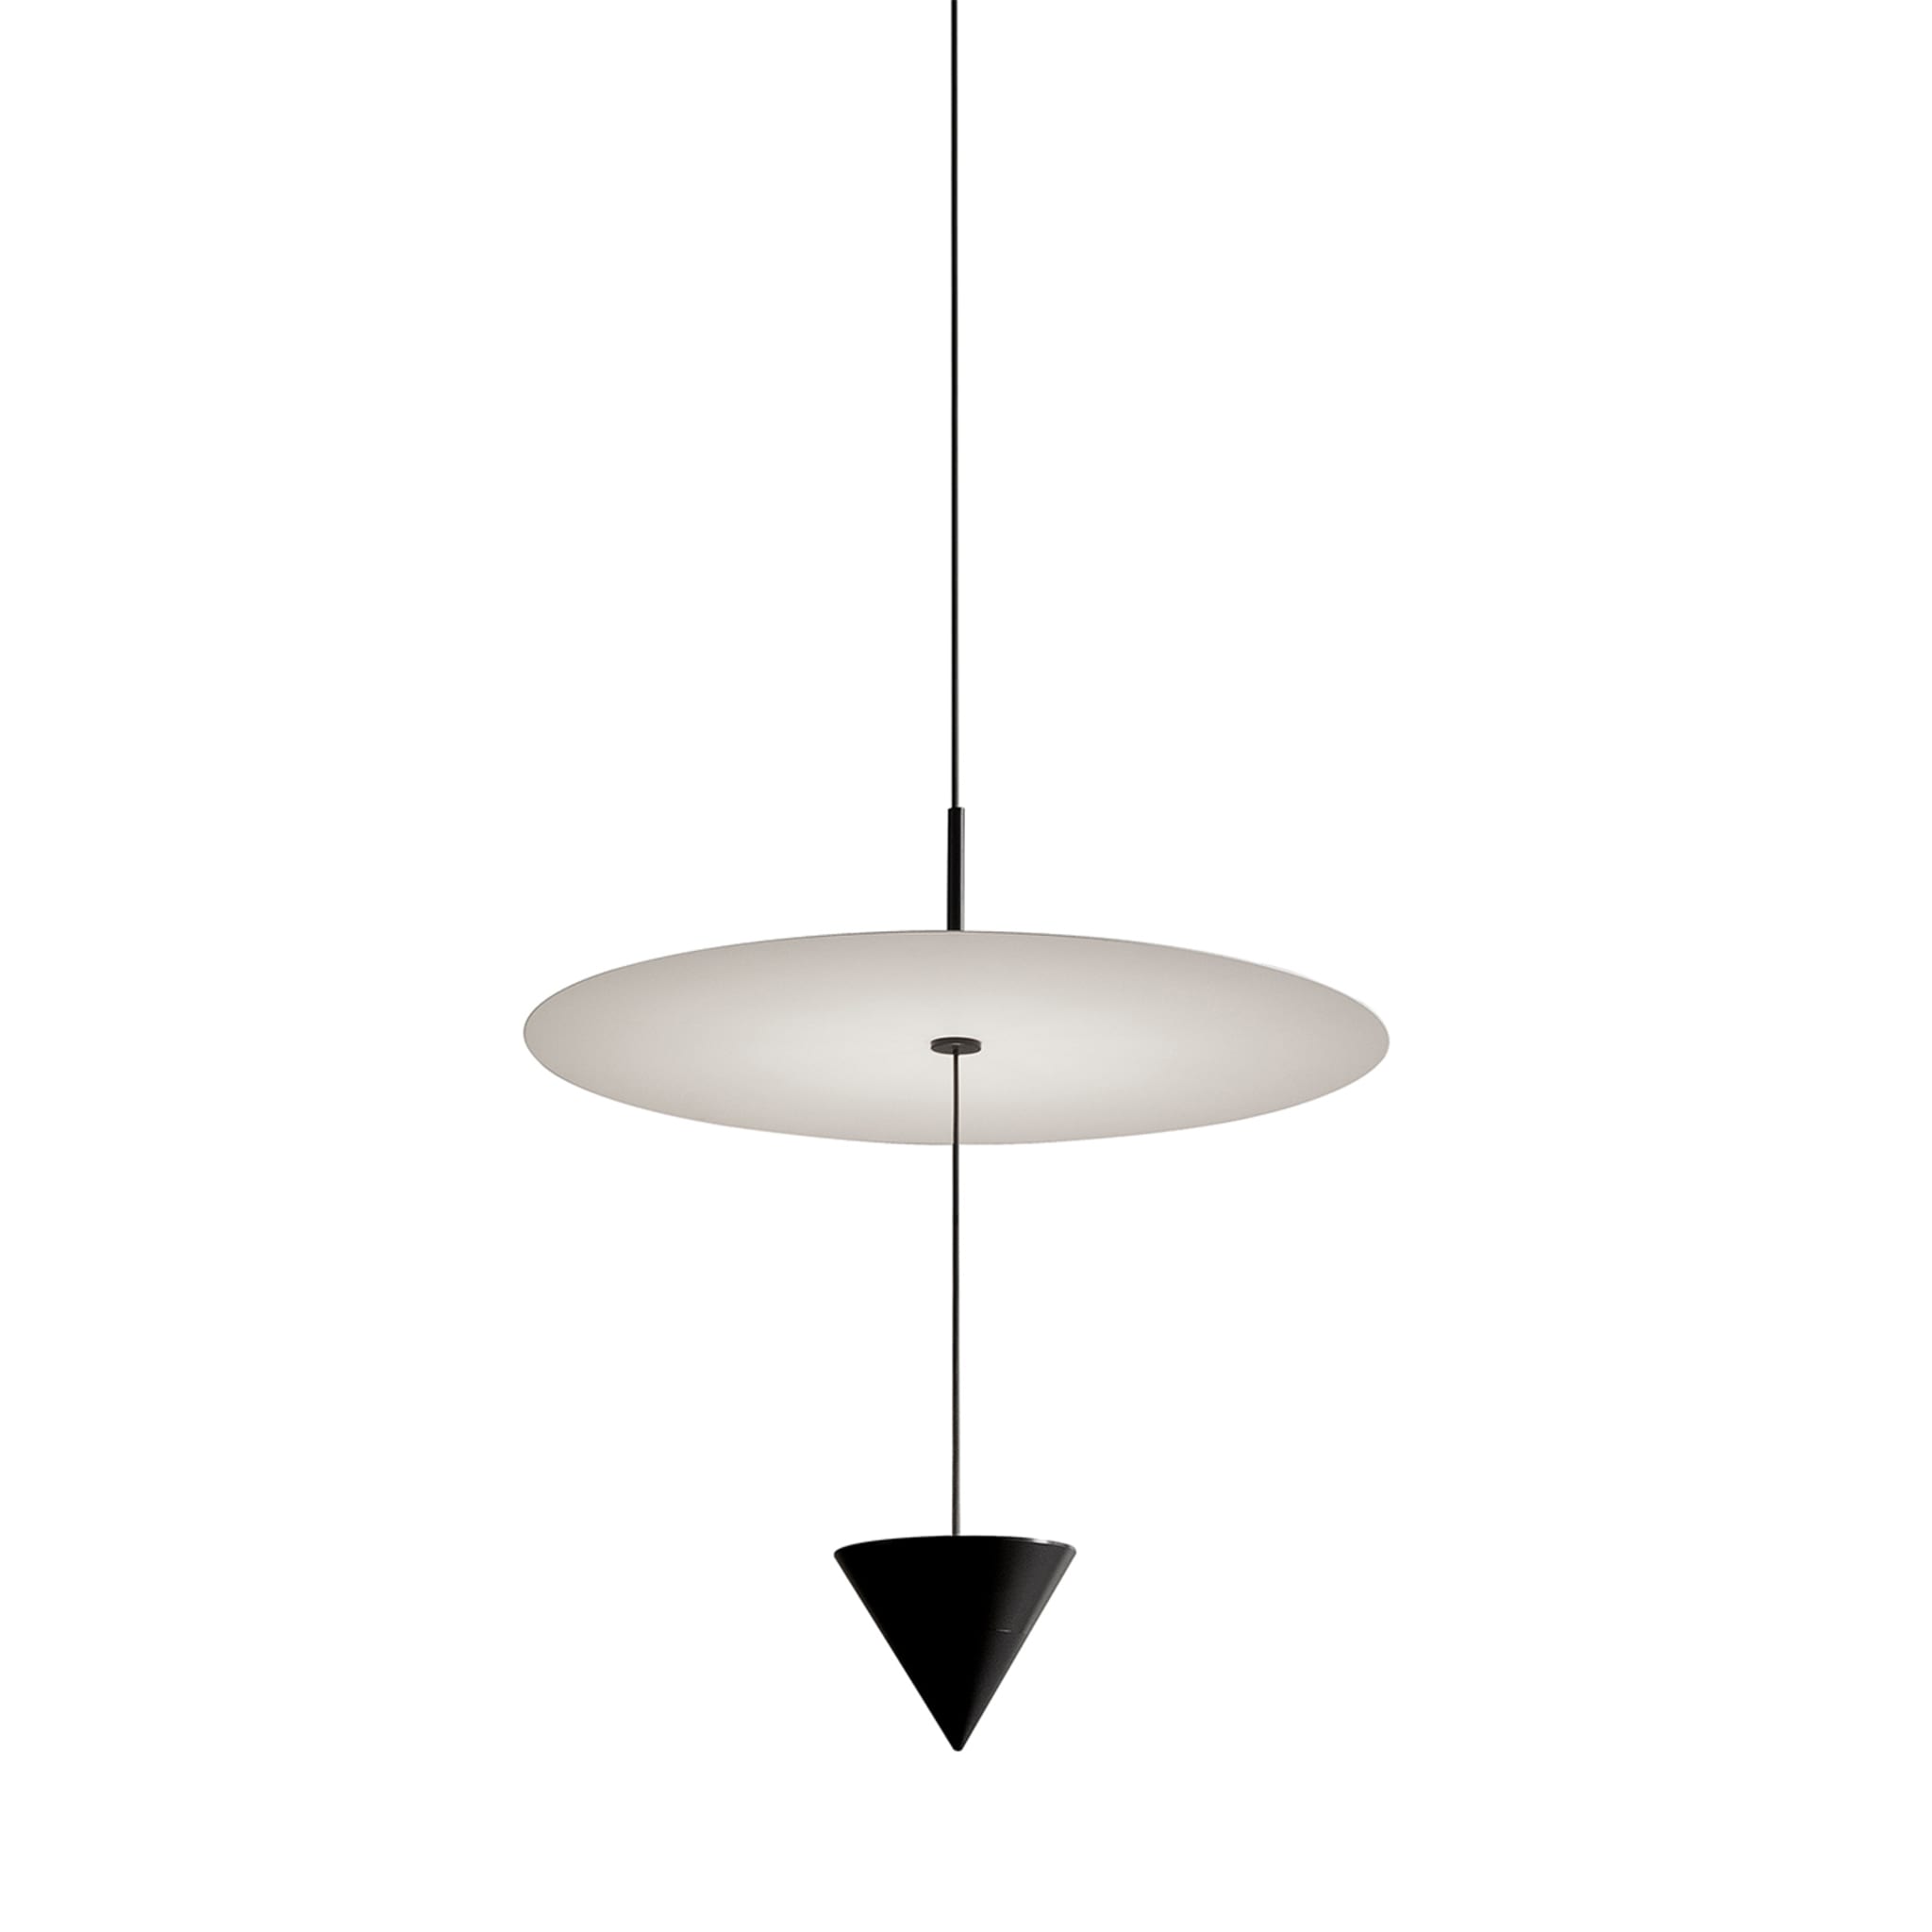 Stralunata Small Pendant Lamp by Matteo Ugolini - Main view